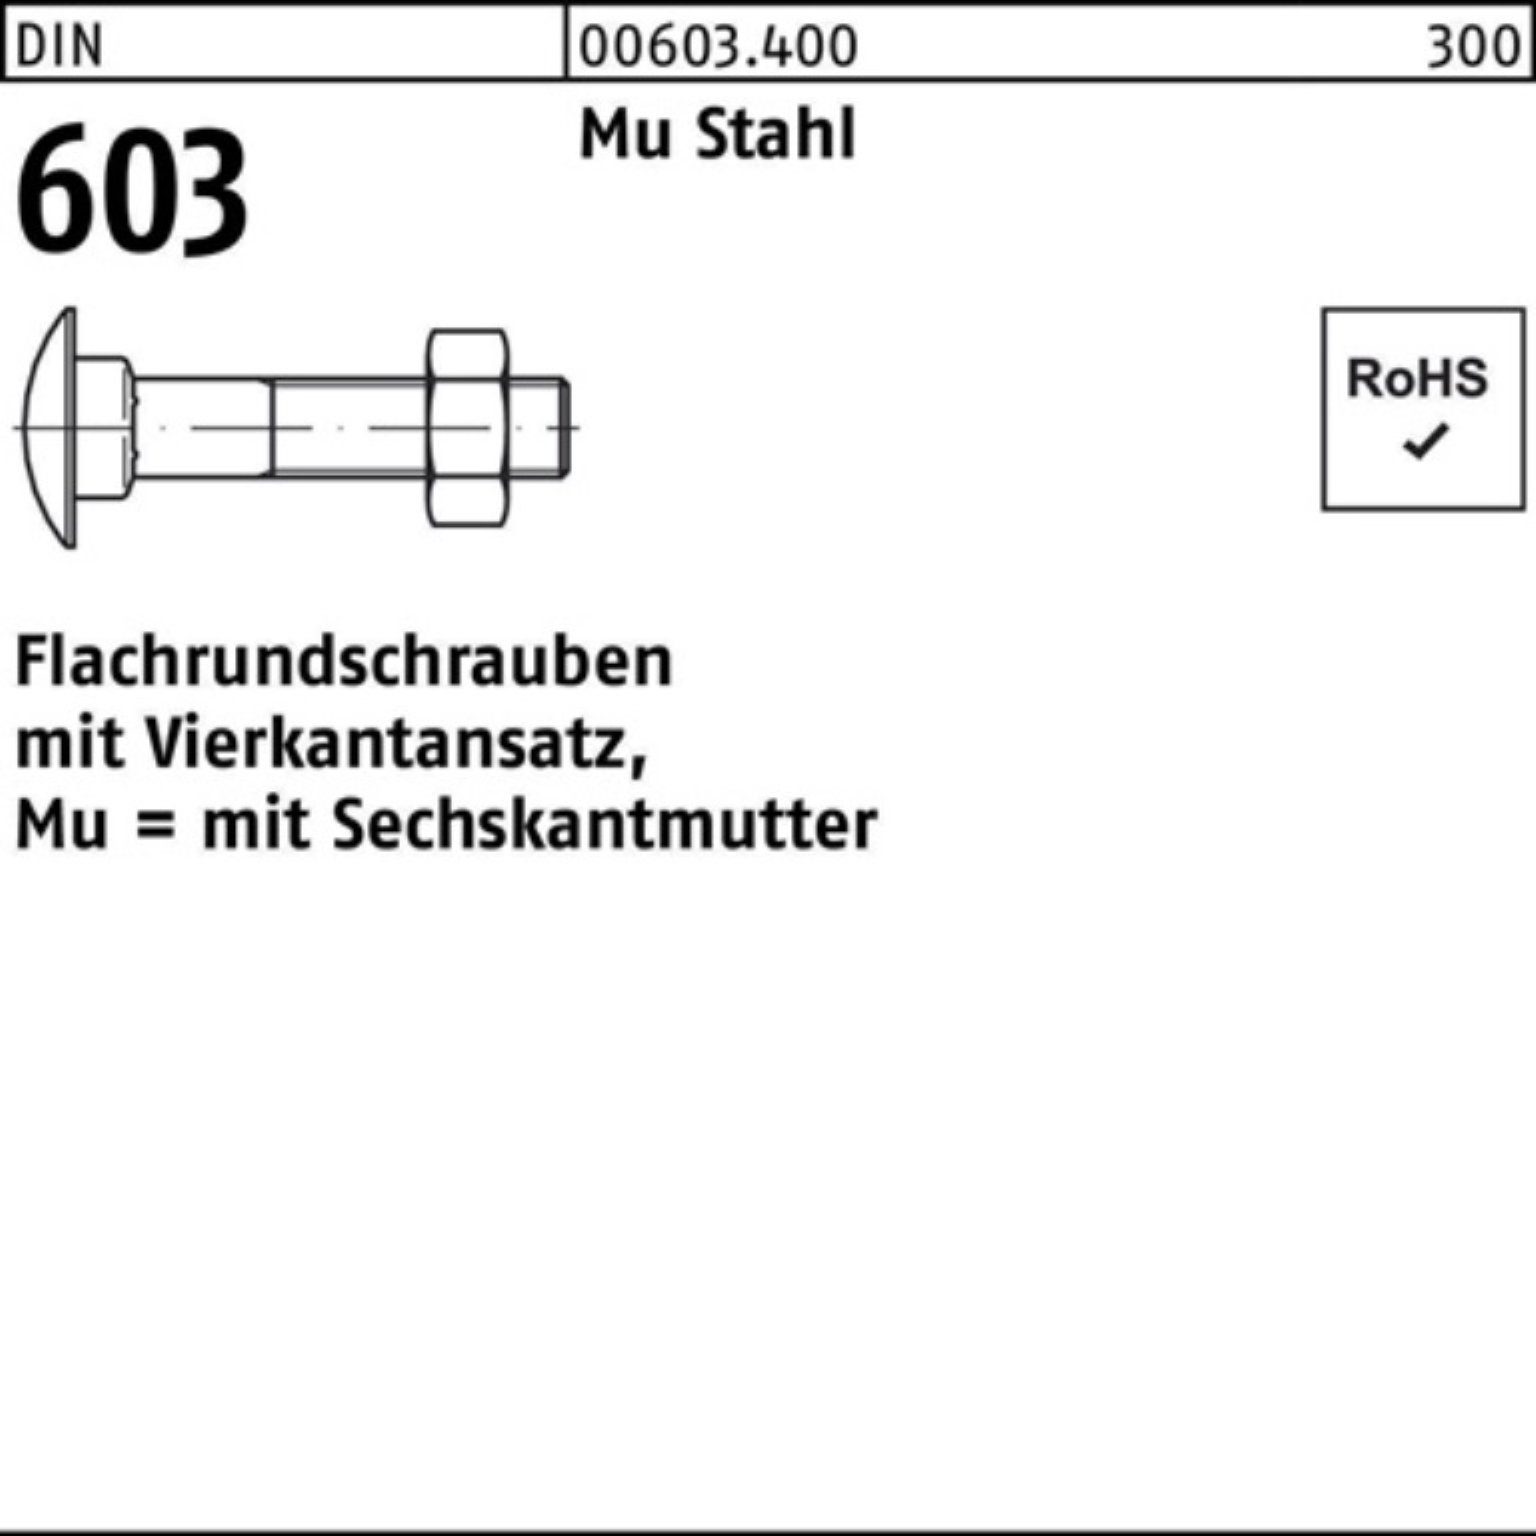 M DIN M6x50 603 Reyher Pack 200er Vierkantansatz/6-ktmutter Flachrundschraube Schraube